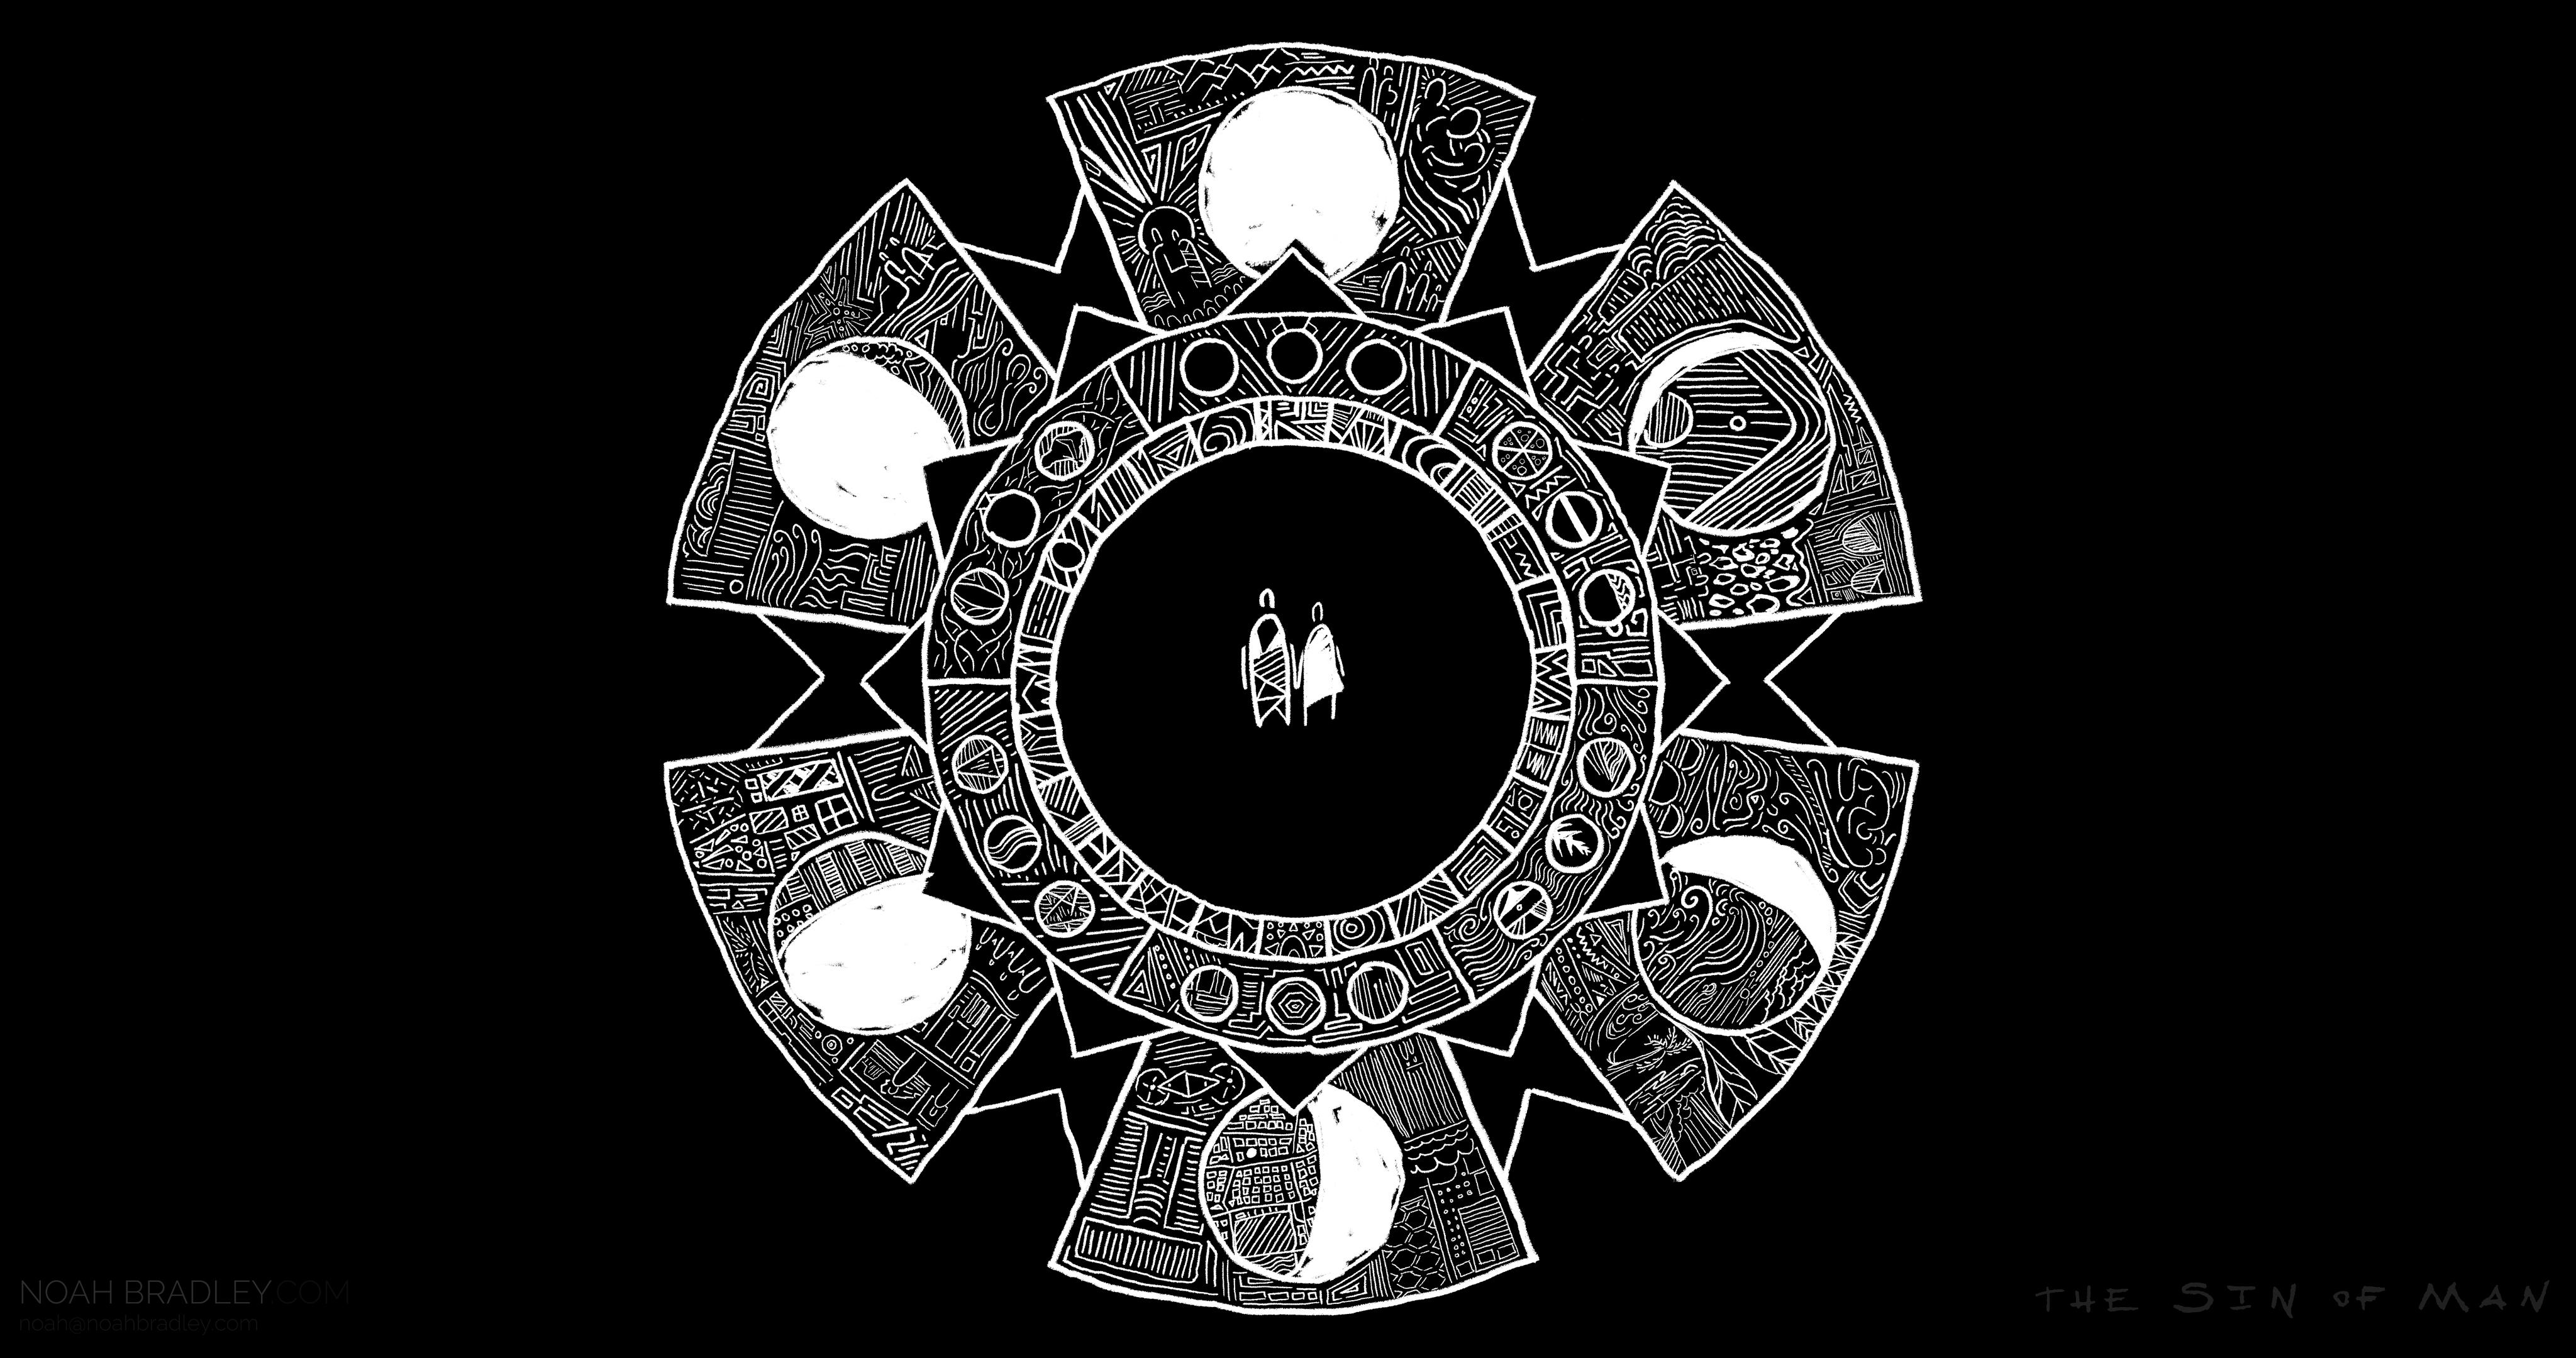 Sun and Man Logo - How the Sun Found the Moon | The Sin of Man